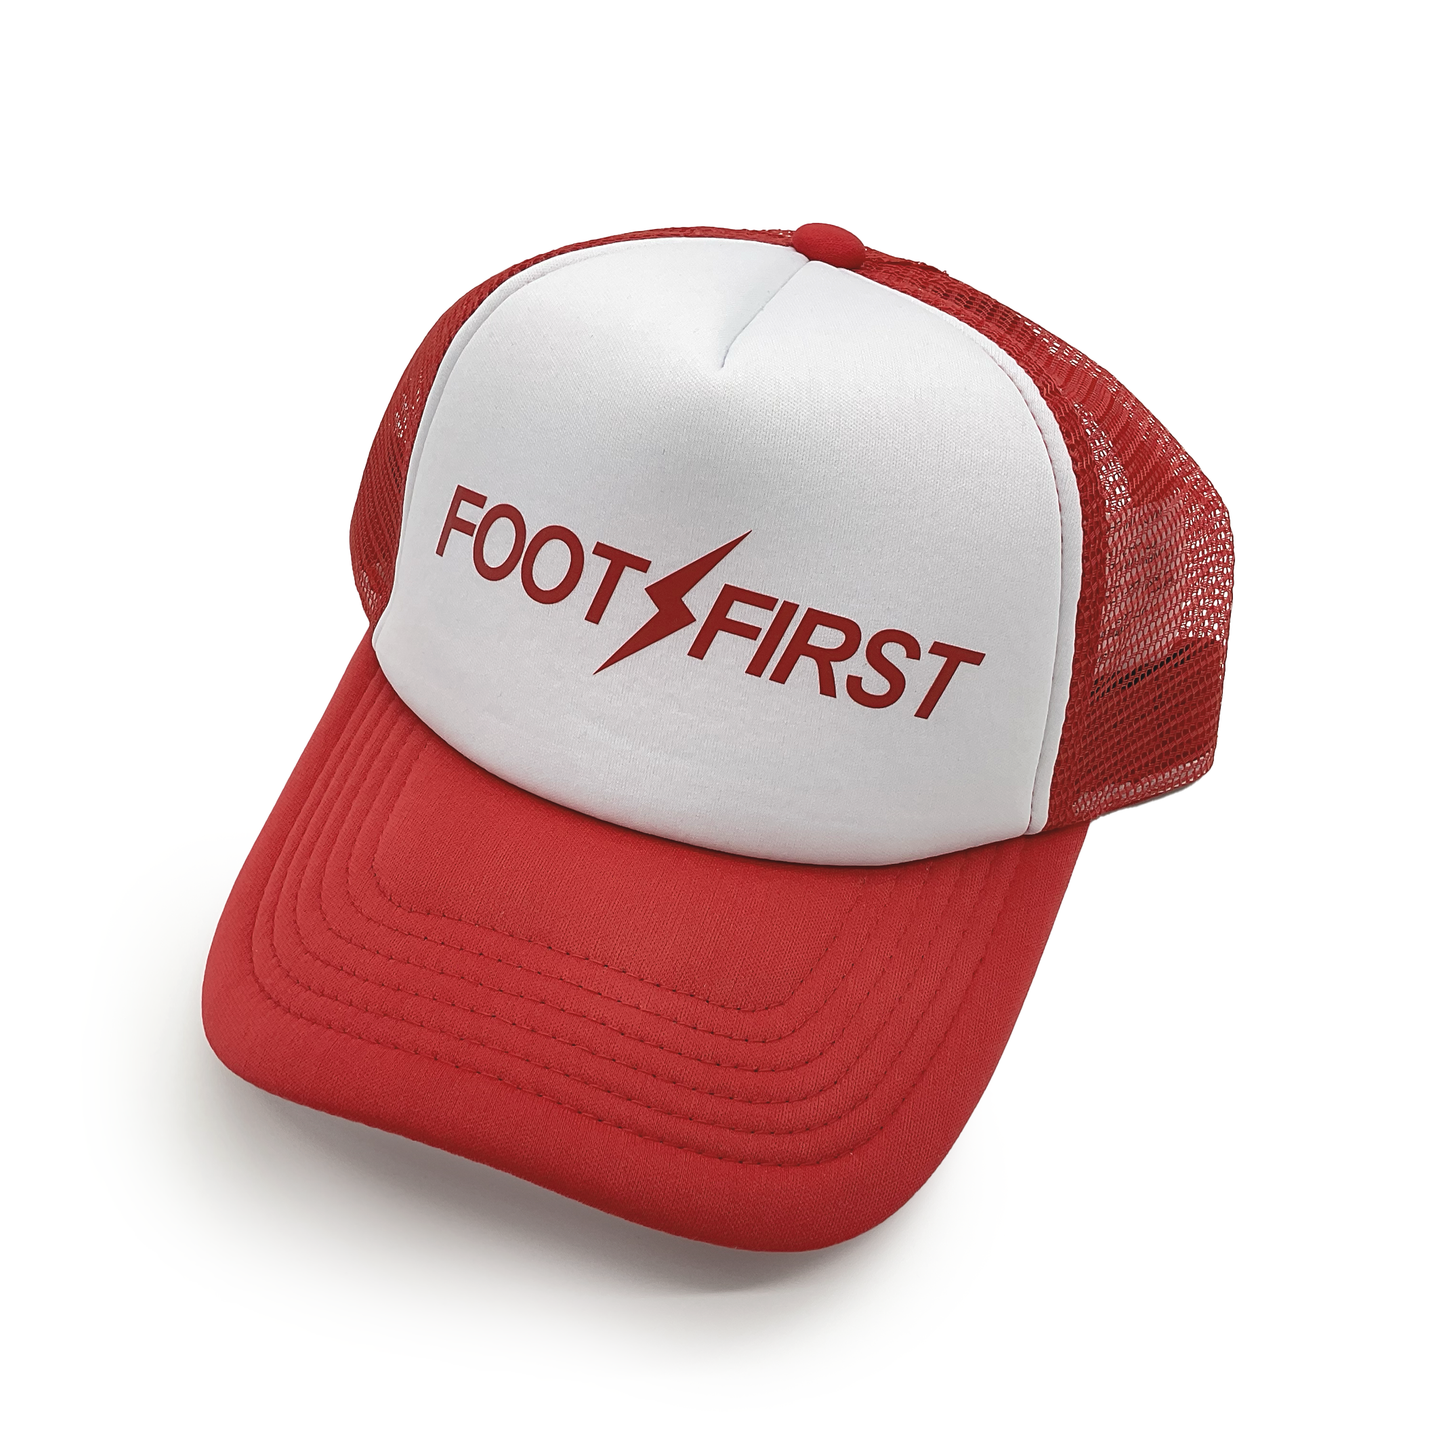 FOOT FIRST CLASSIC LOGO 2 TONE MESH CAP